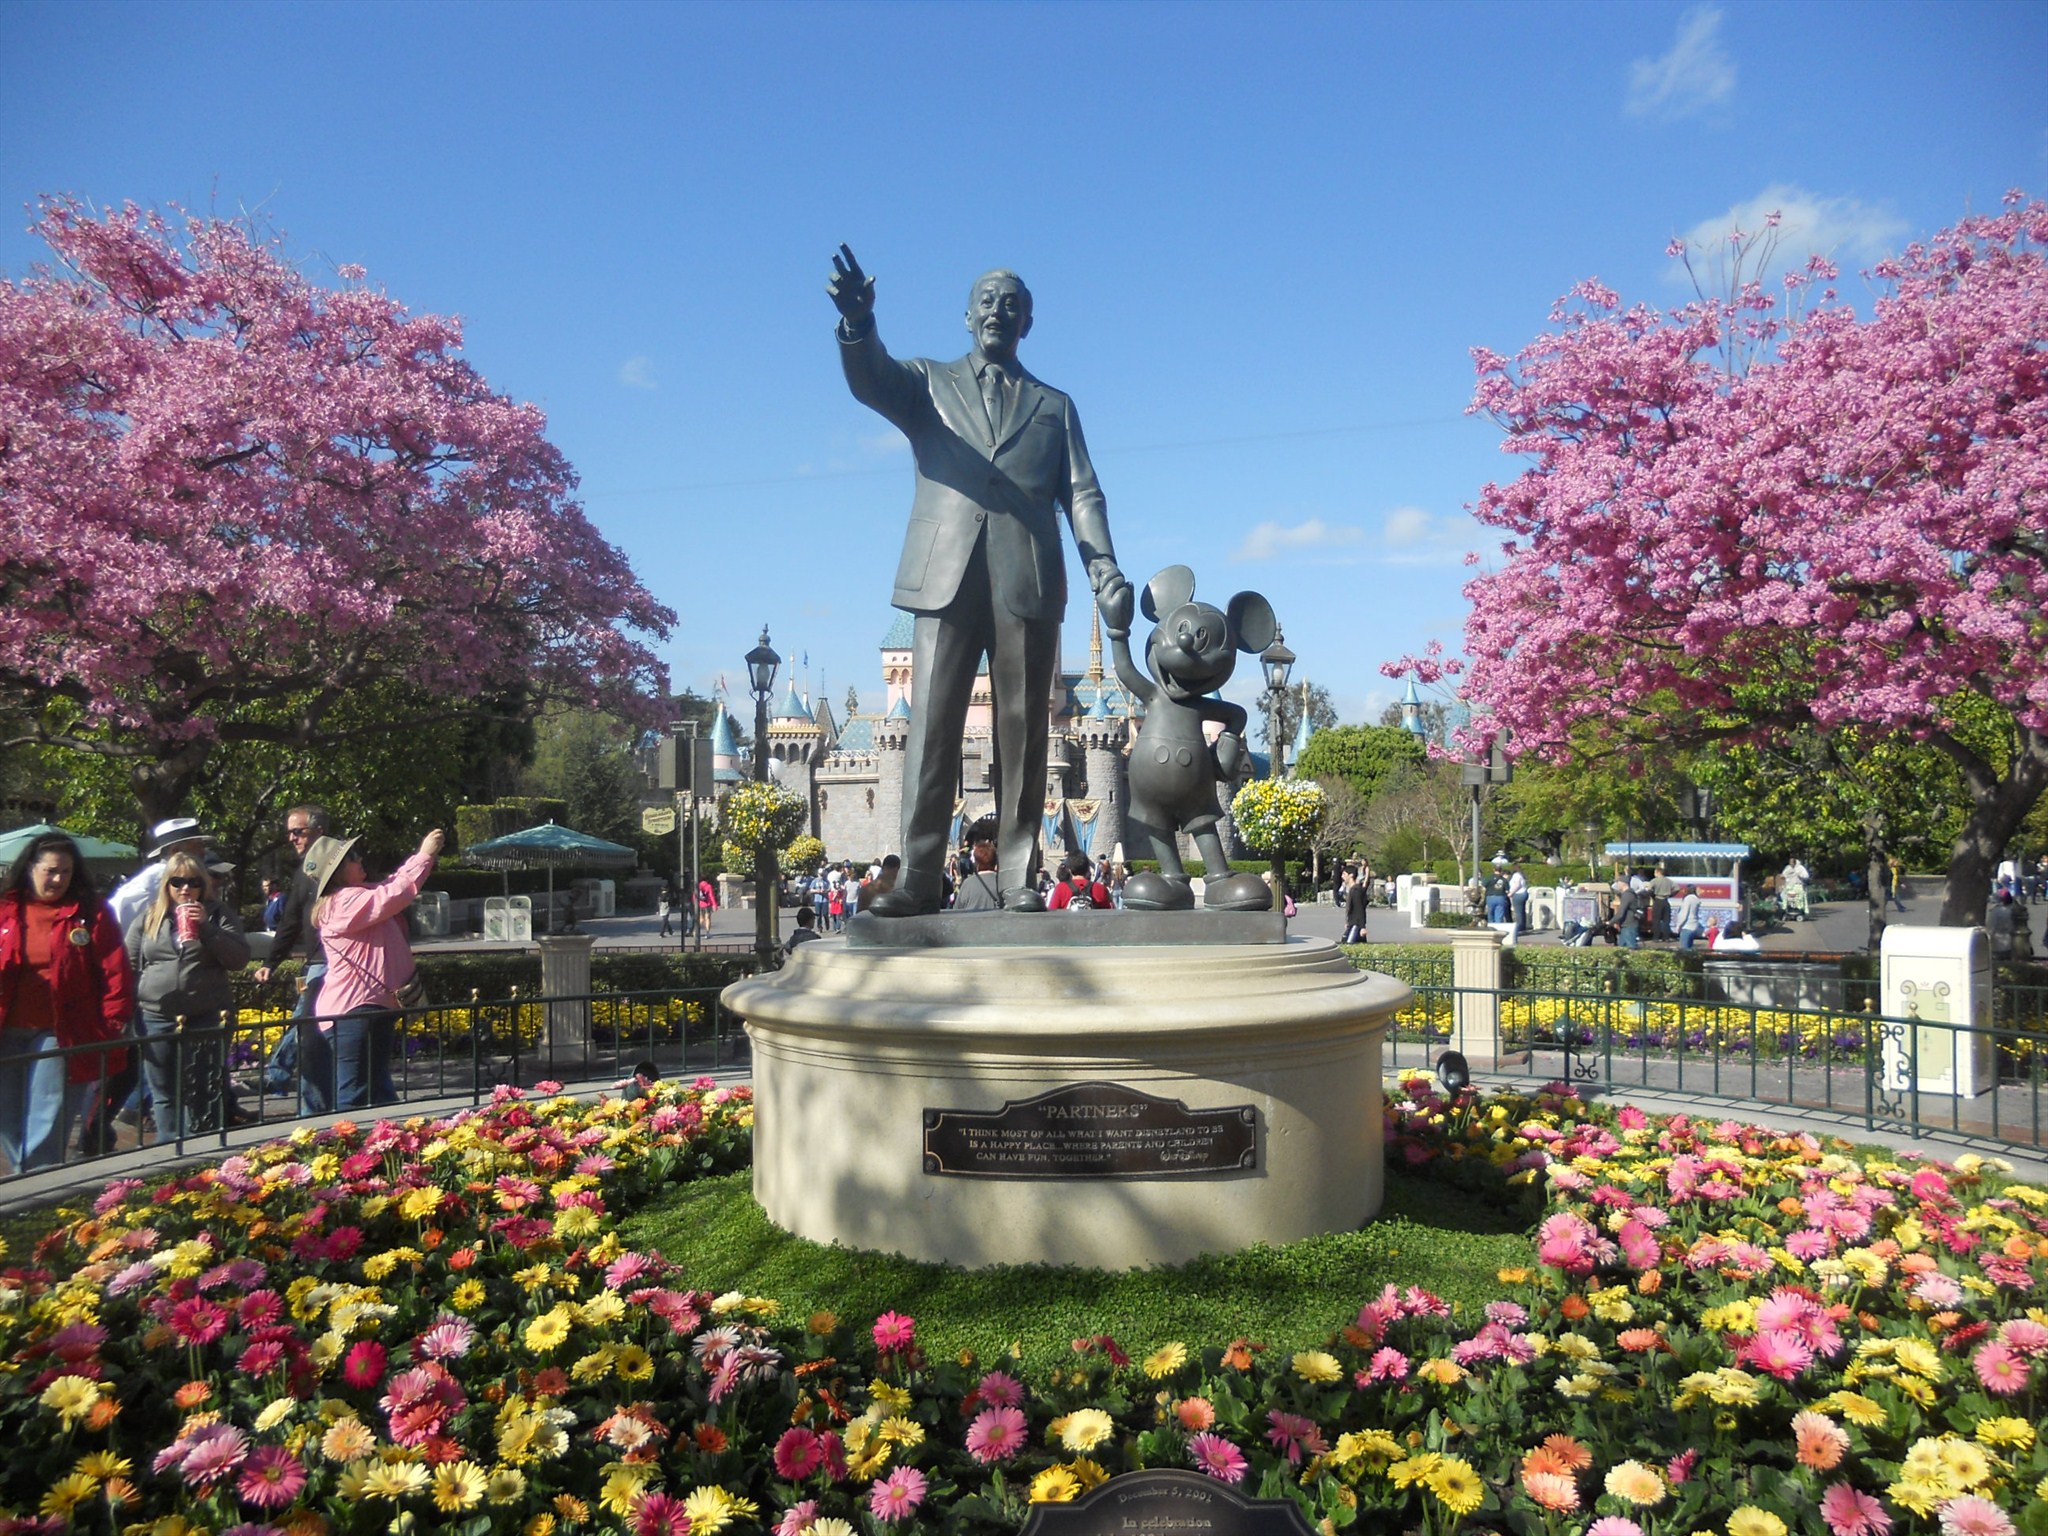 "Partners" Statue depicting Walt Disney & Mickey